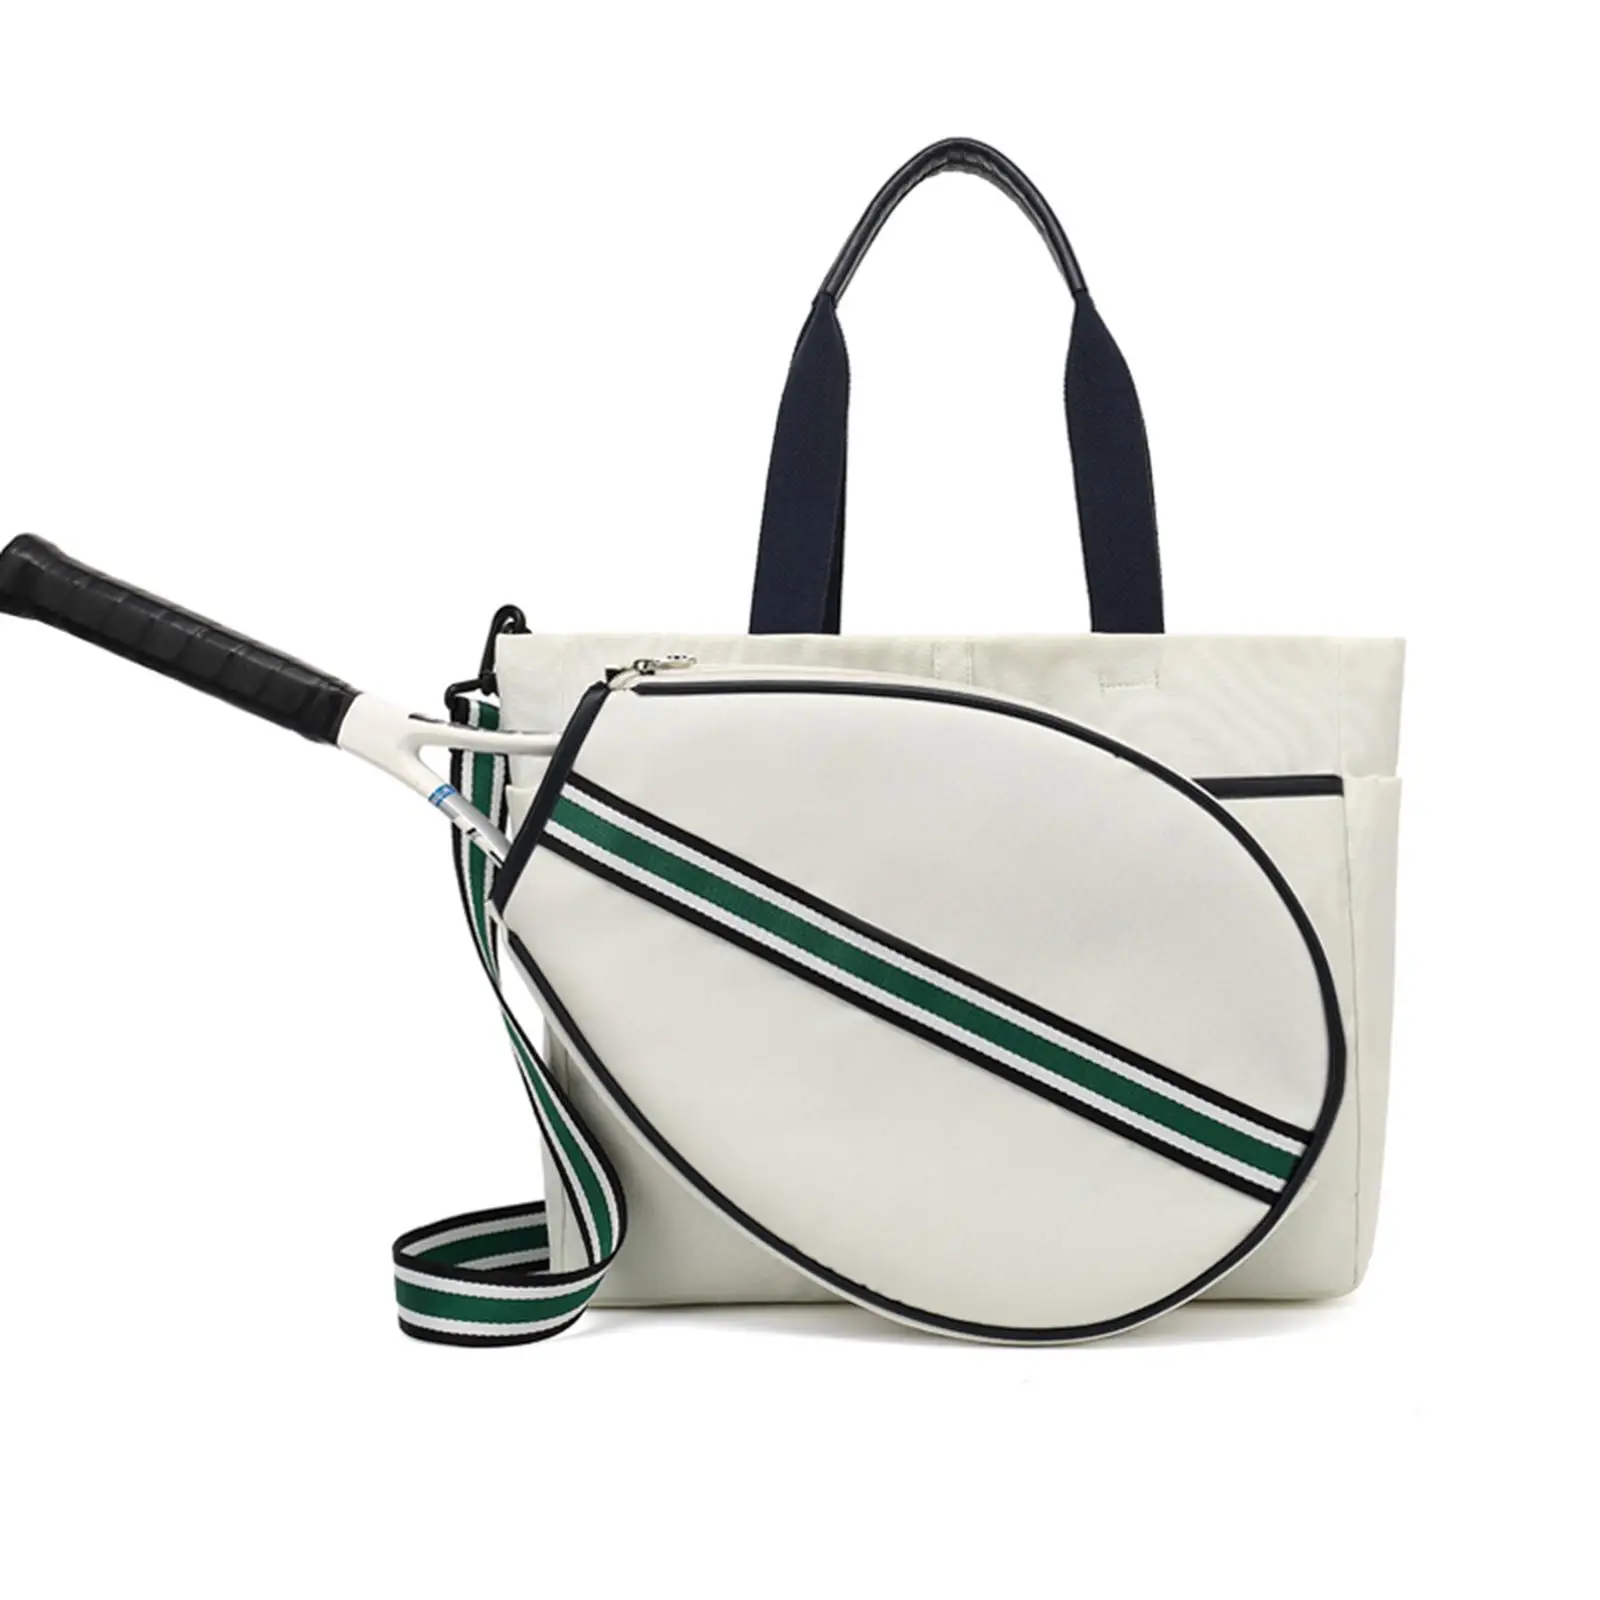 Tennis Tote with Detachable Shoulder Strap Large Storage Outdoor Sports Portable Carrying Multipurpose Tennis Handbag Racket Bag